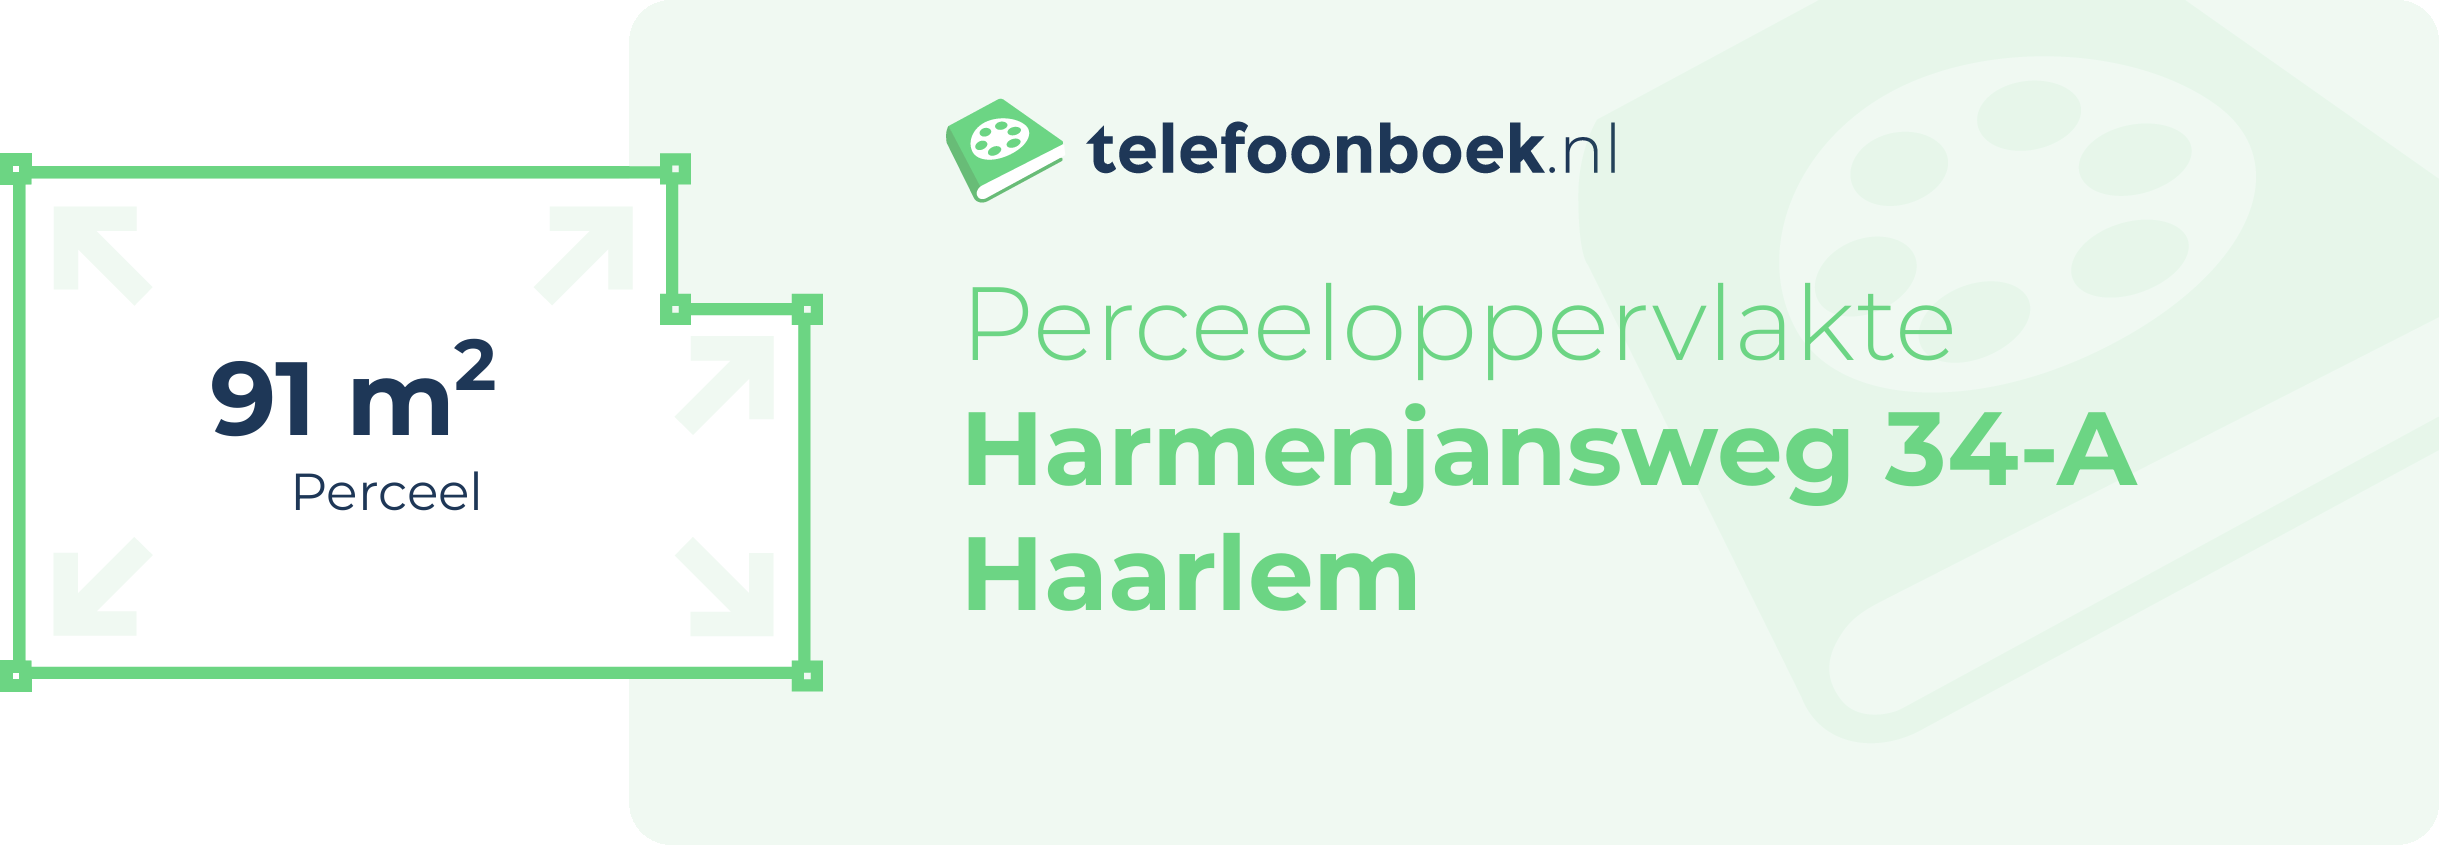 Perceeloppervlakte Harmenjansweg 34-A Haarlem